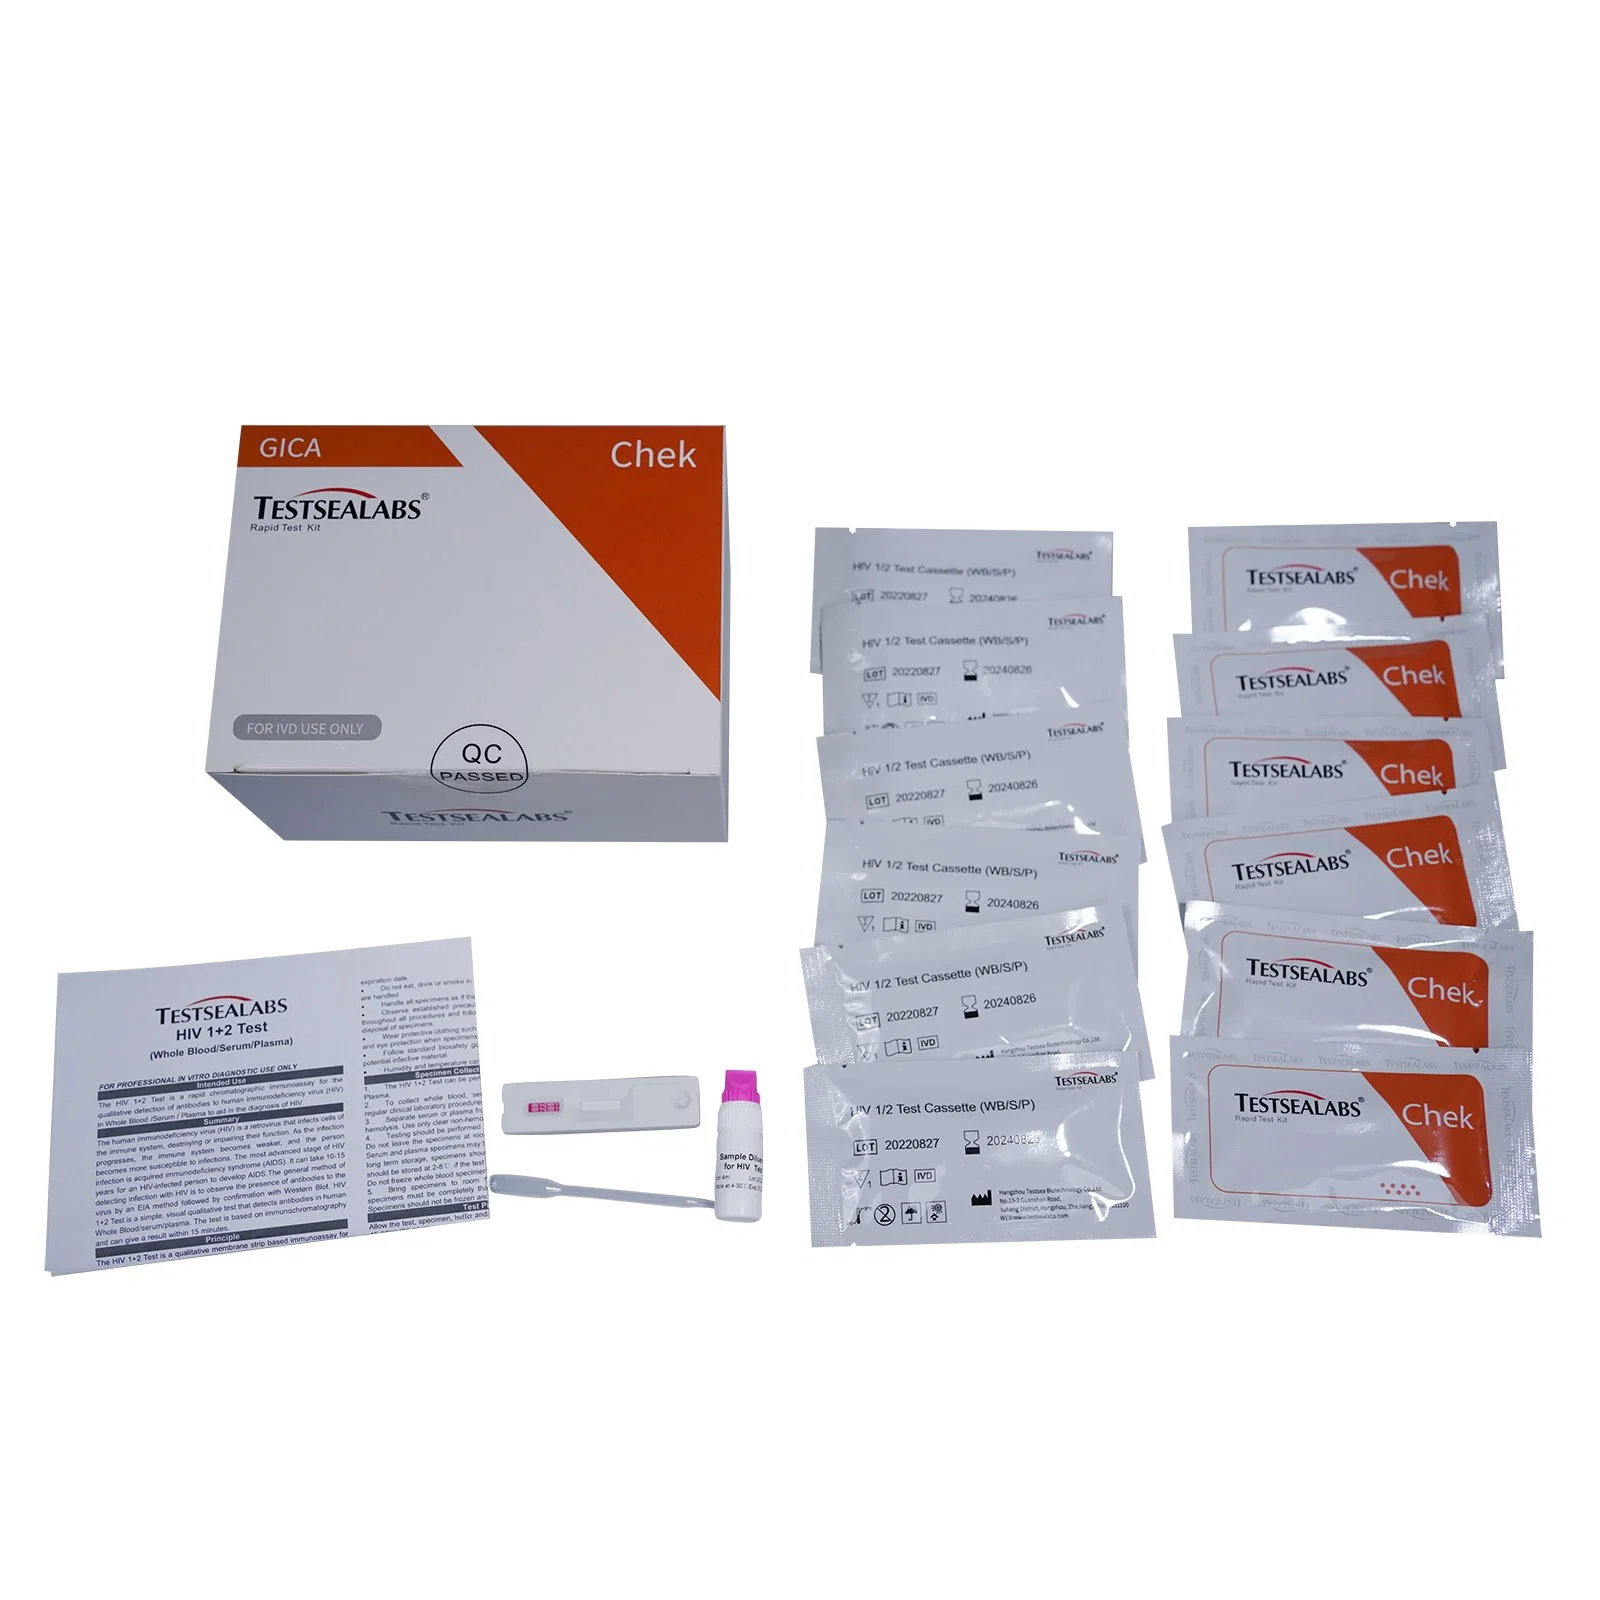 HIV Blood Test / Diagnostic HIV 1/2 Antigen Rapid Test Strips Kit Para humano